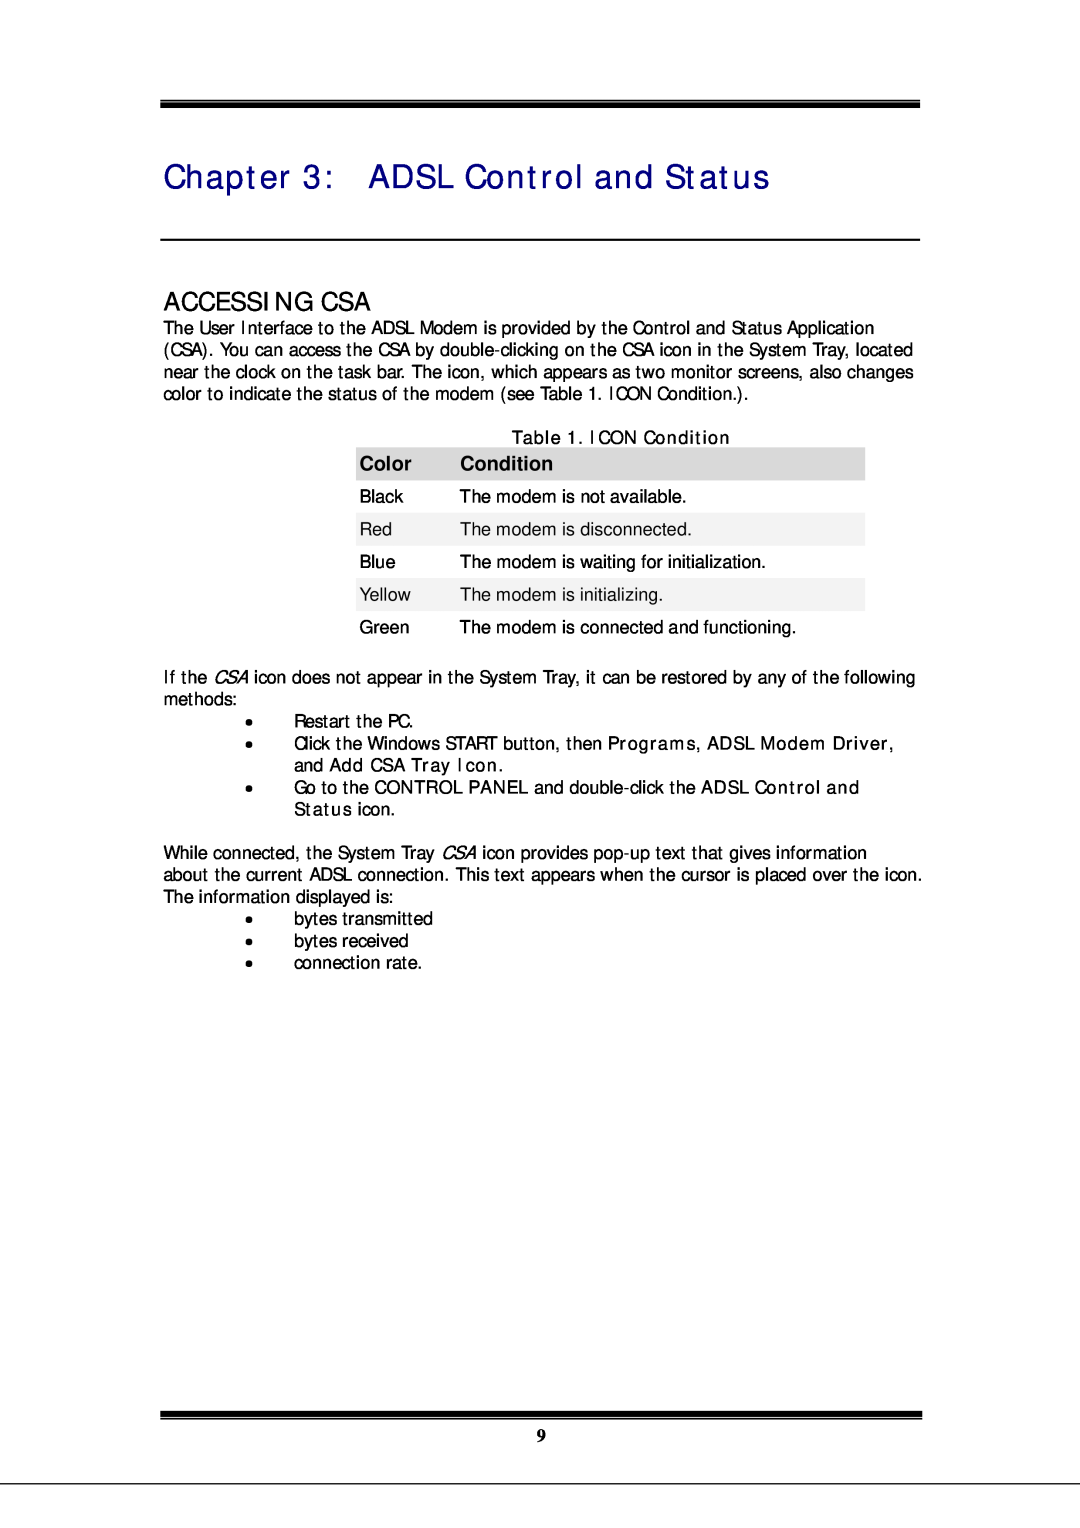 Microsoft EA900 manual ADSL Control and Status, Accessing Csa, ICON Condition, Color 